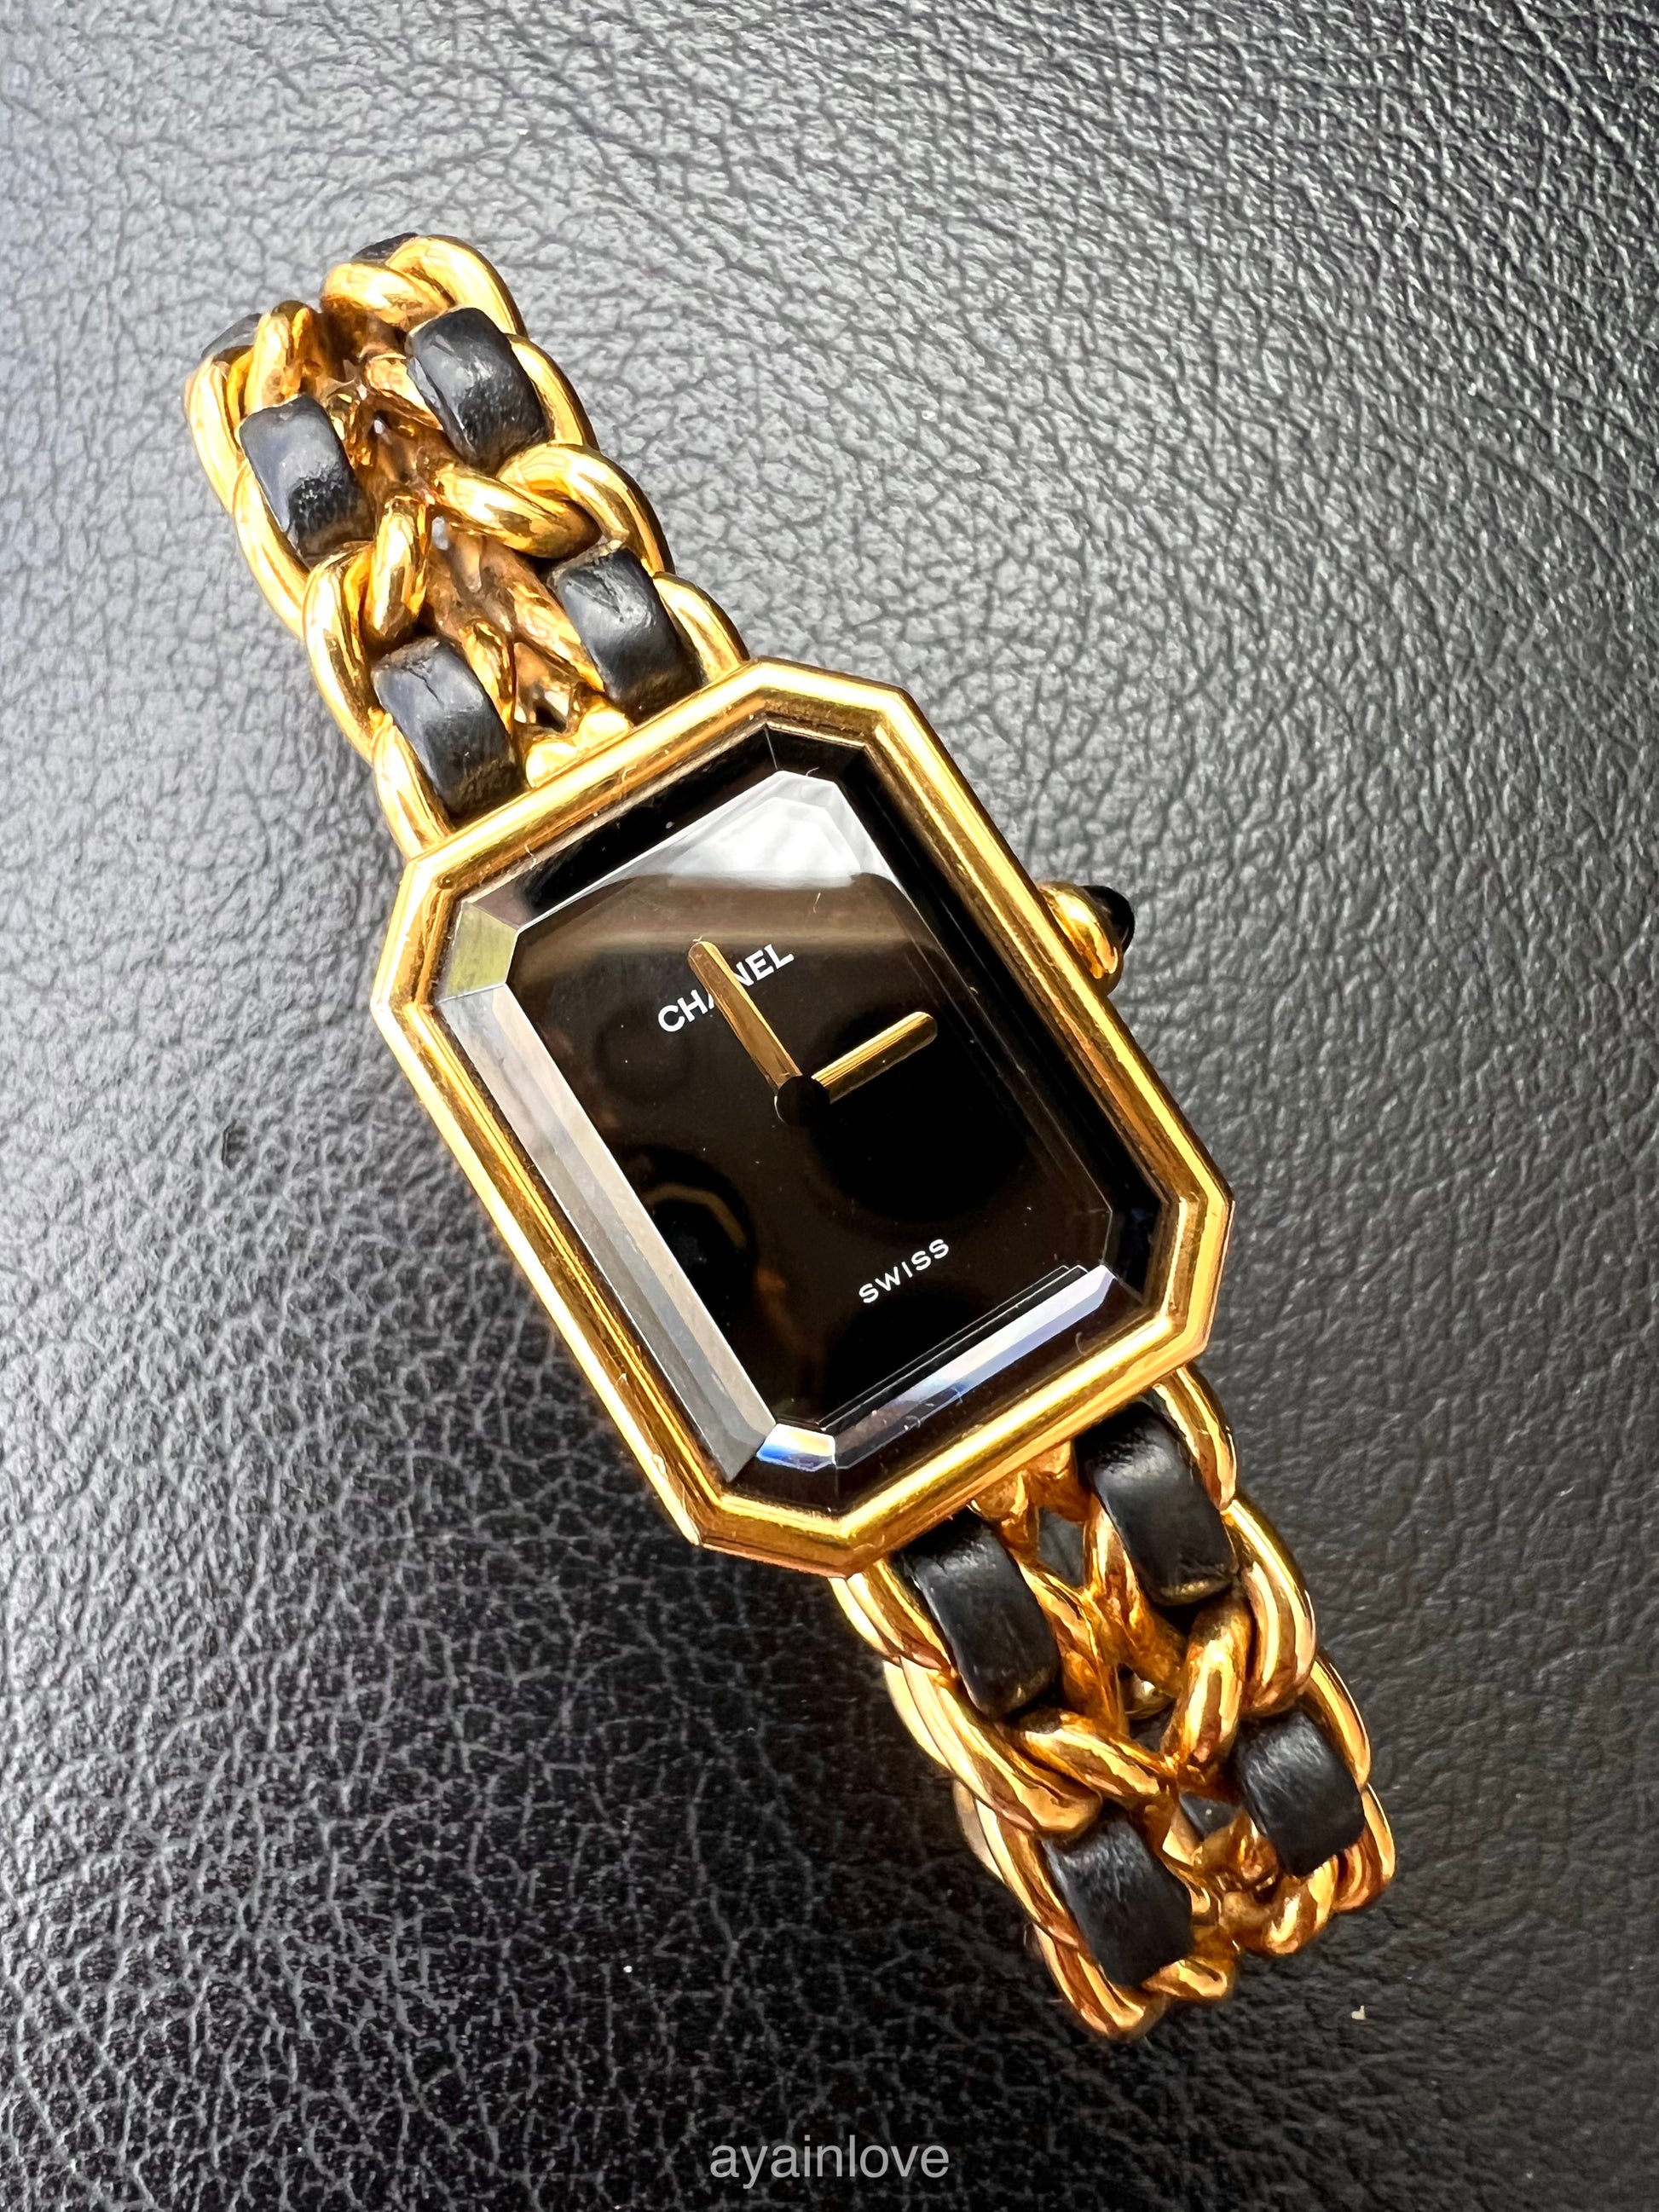 Chanel - CHANEL PREMIER 18K YELLOW GOLD 1987 BLACK DIAL WATCH